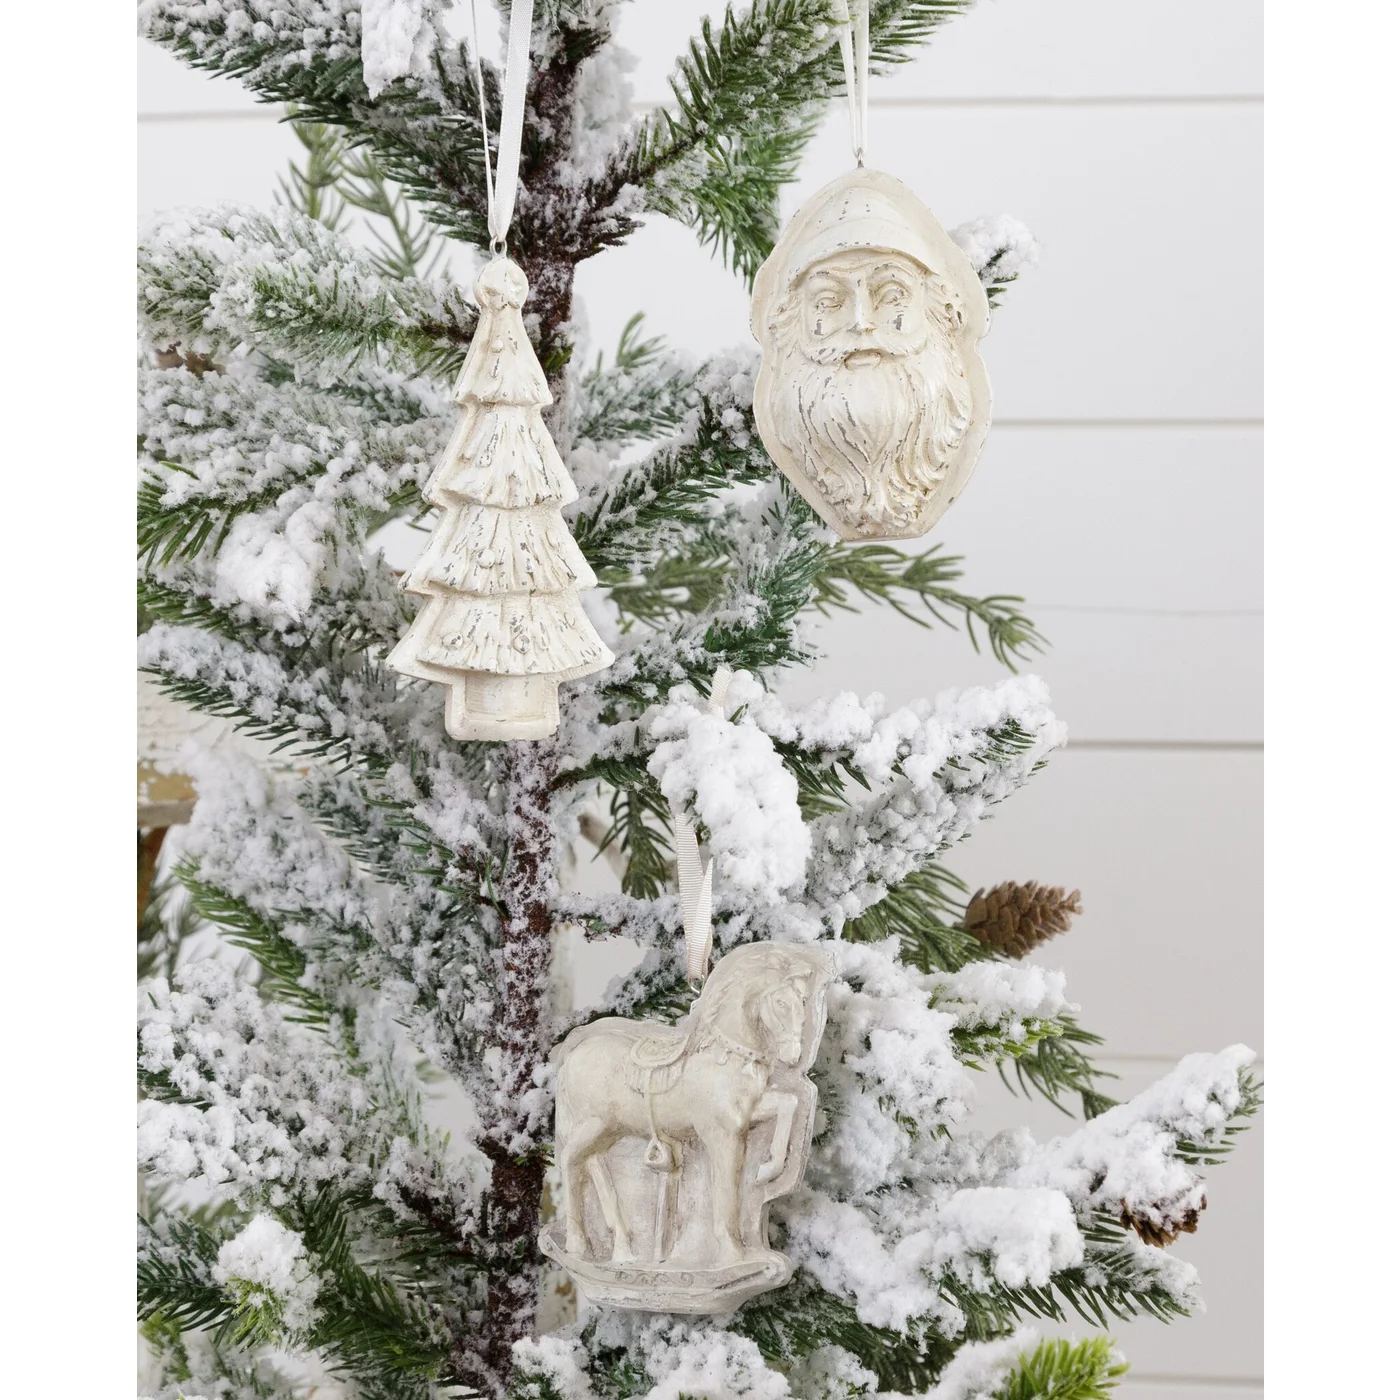 Set of 3 Tree Santa Carousal Horse Mold Ornaments